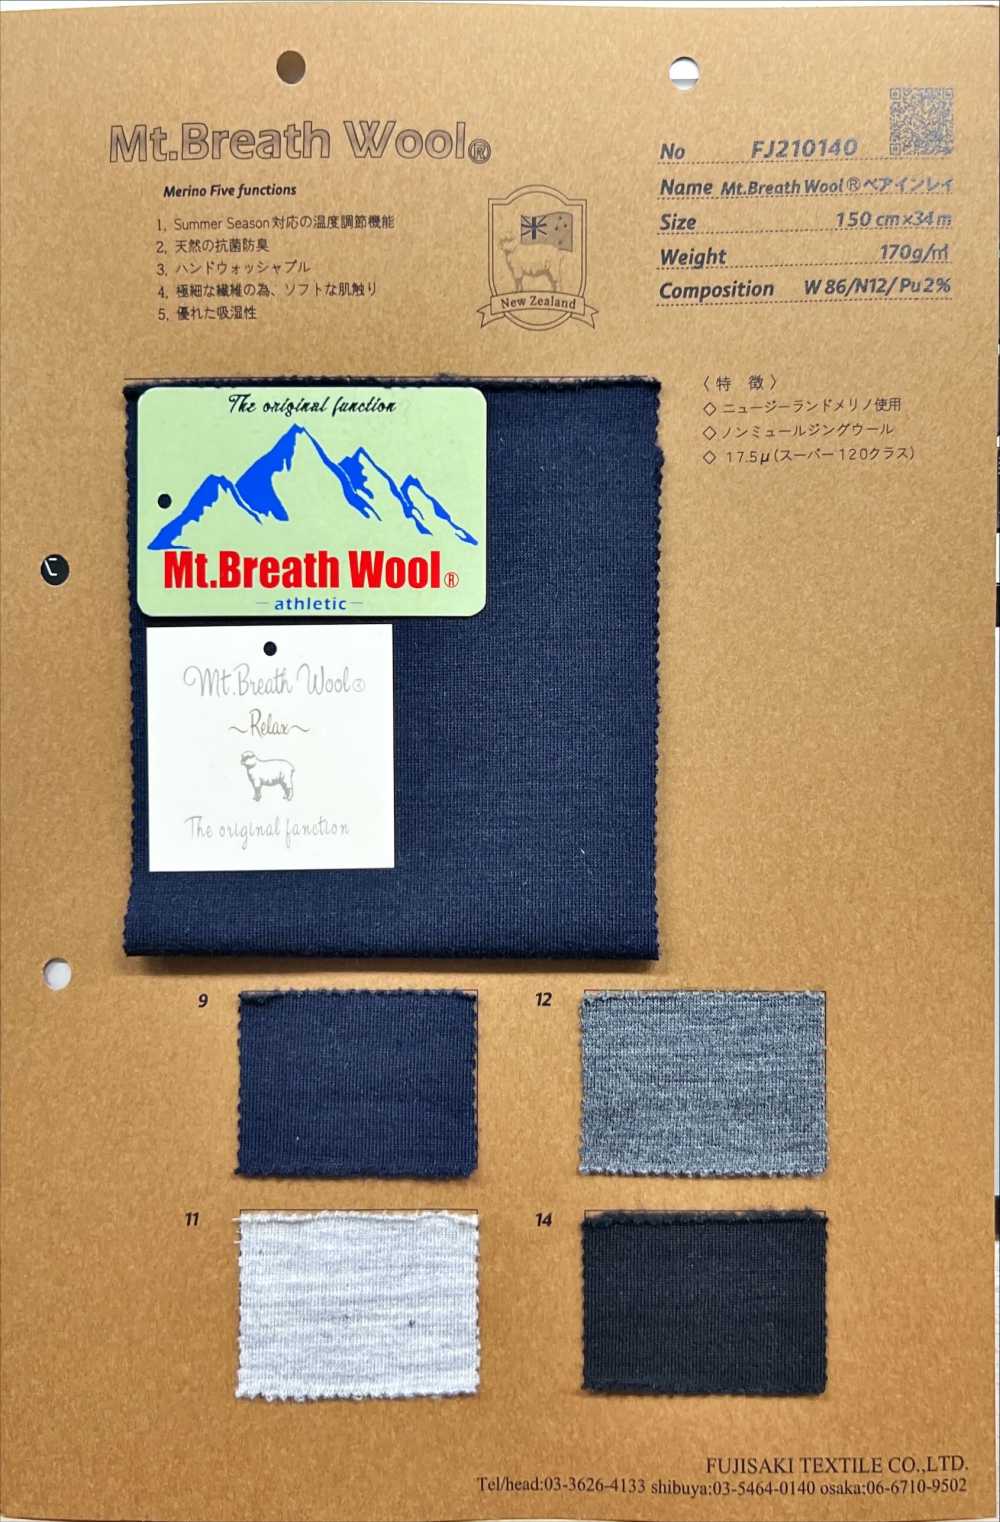 FJ210140 Khảm Gấu Len Mt.Breath[Vải] Fujisaki Textile